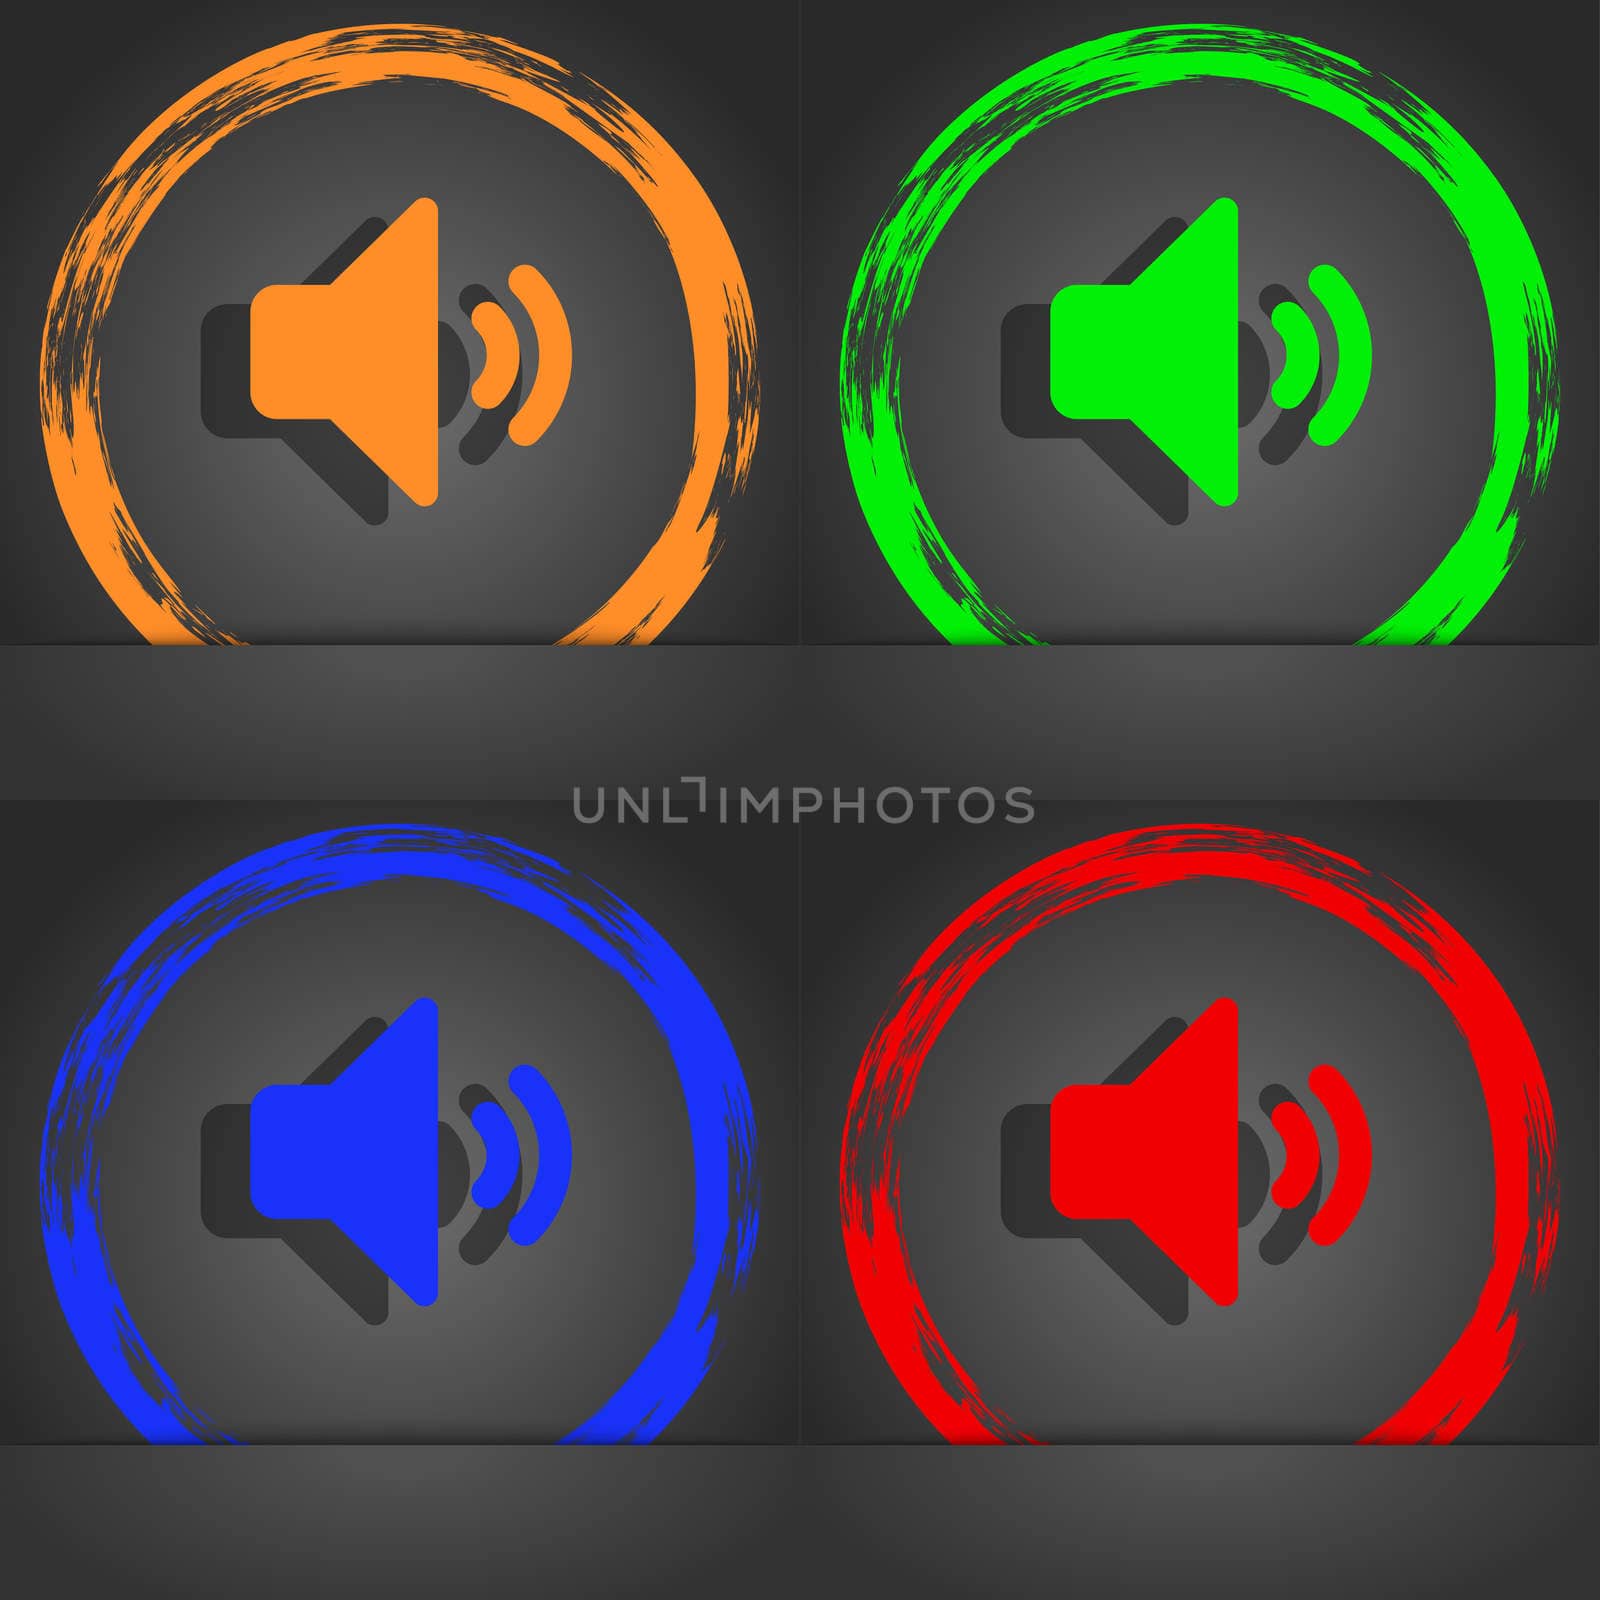 Speaker volume, Sound icon symbol. Fashionable modern style. In the orange, green, blue, green design. illustration